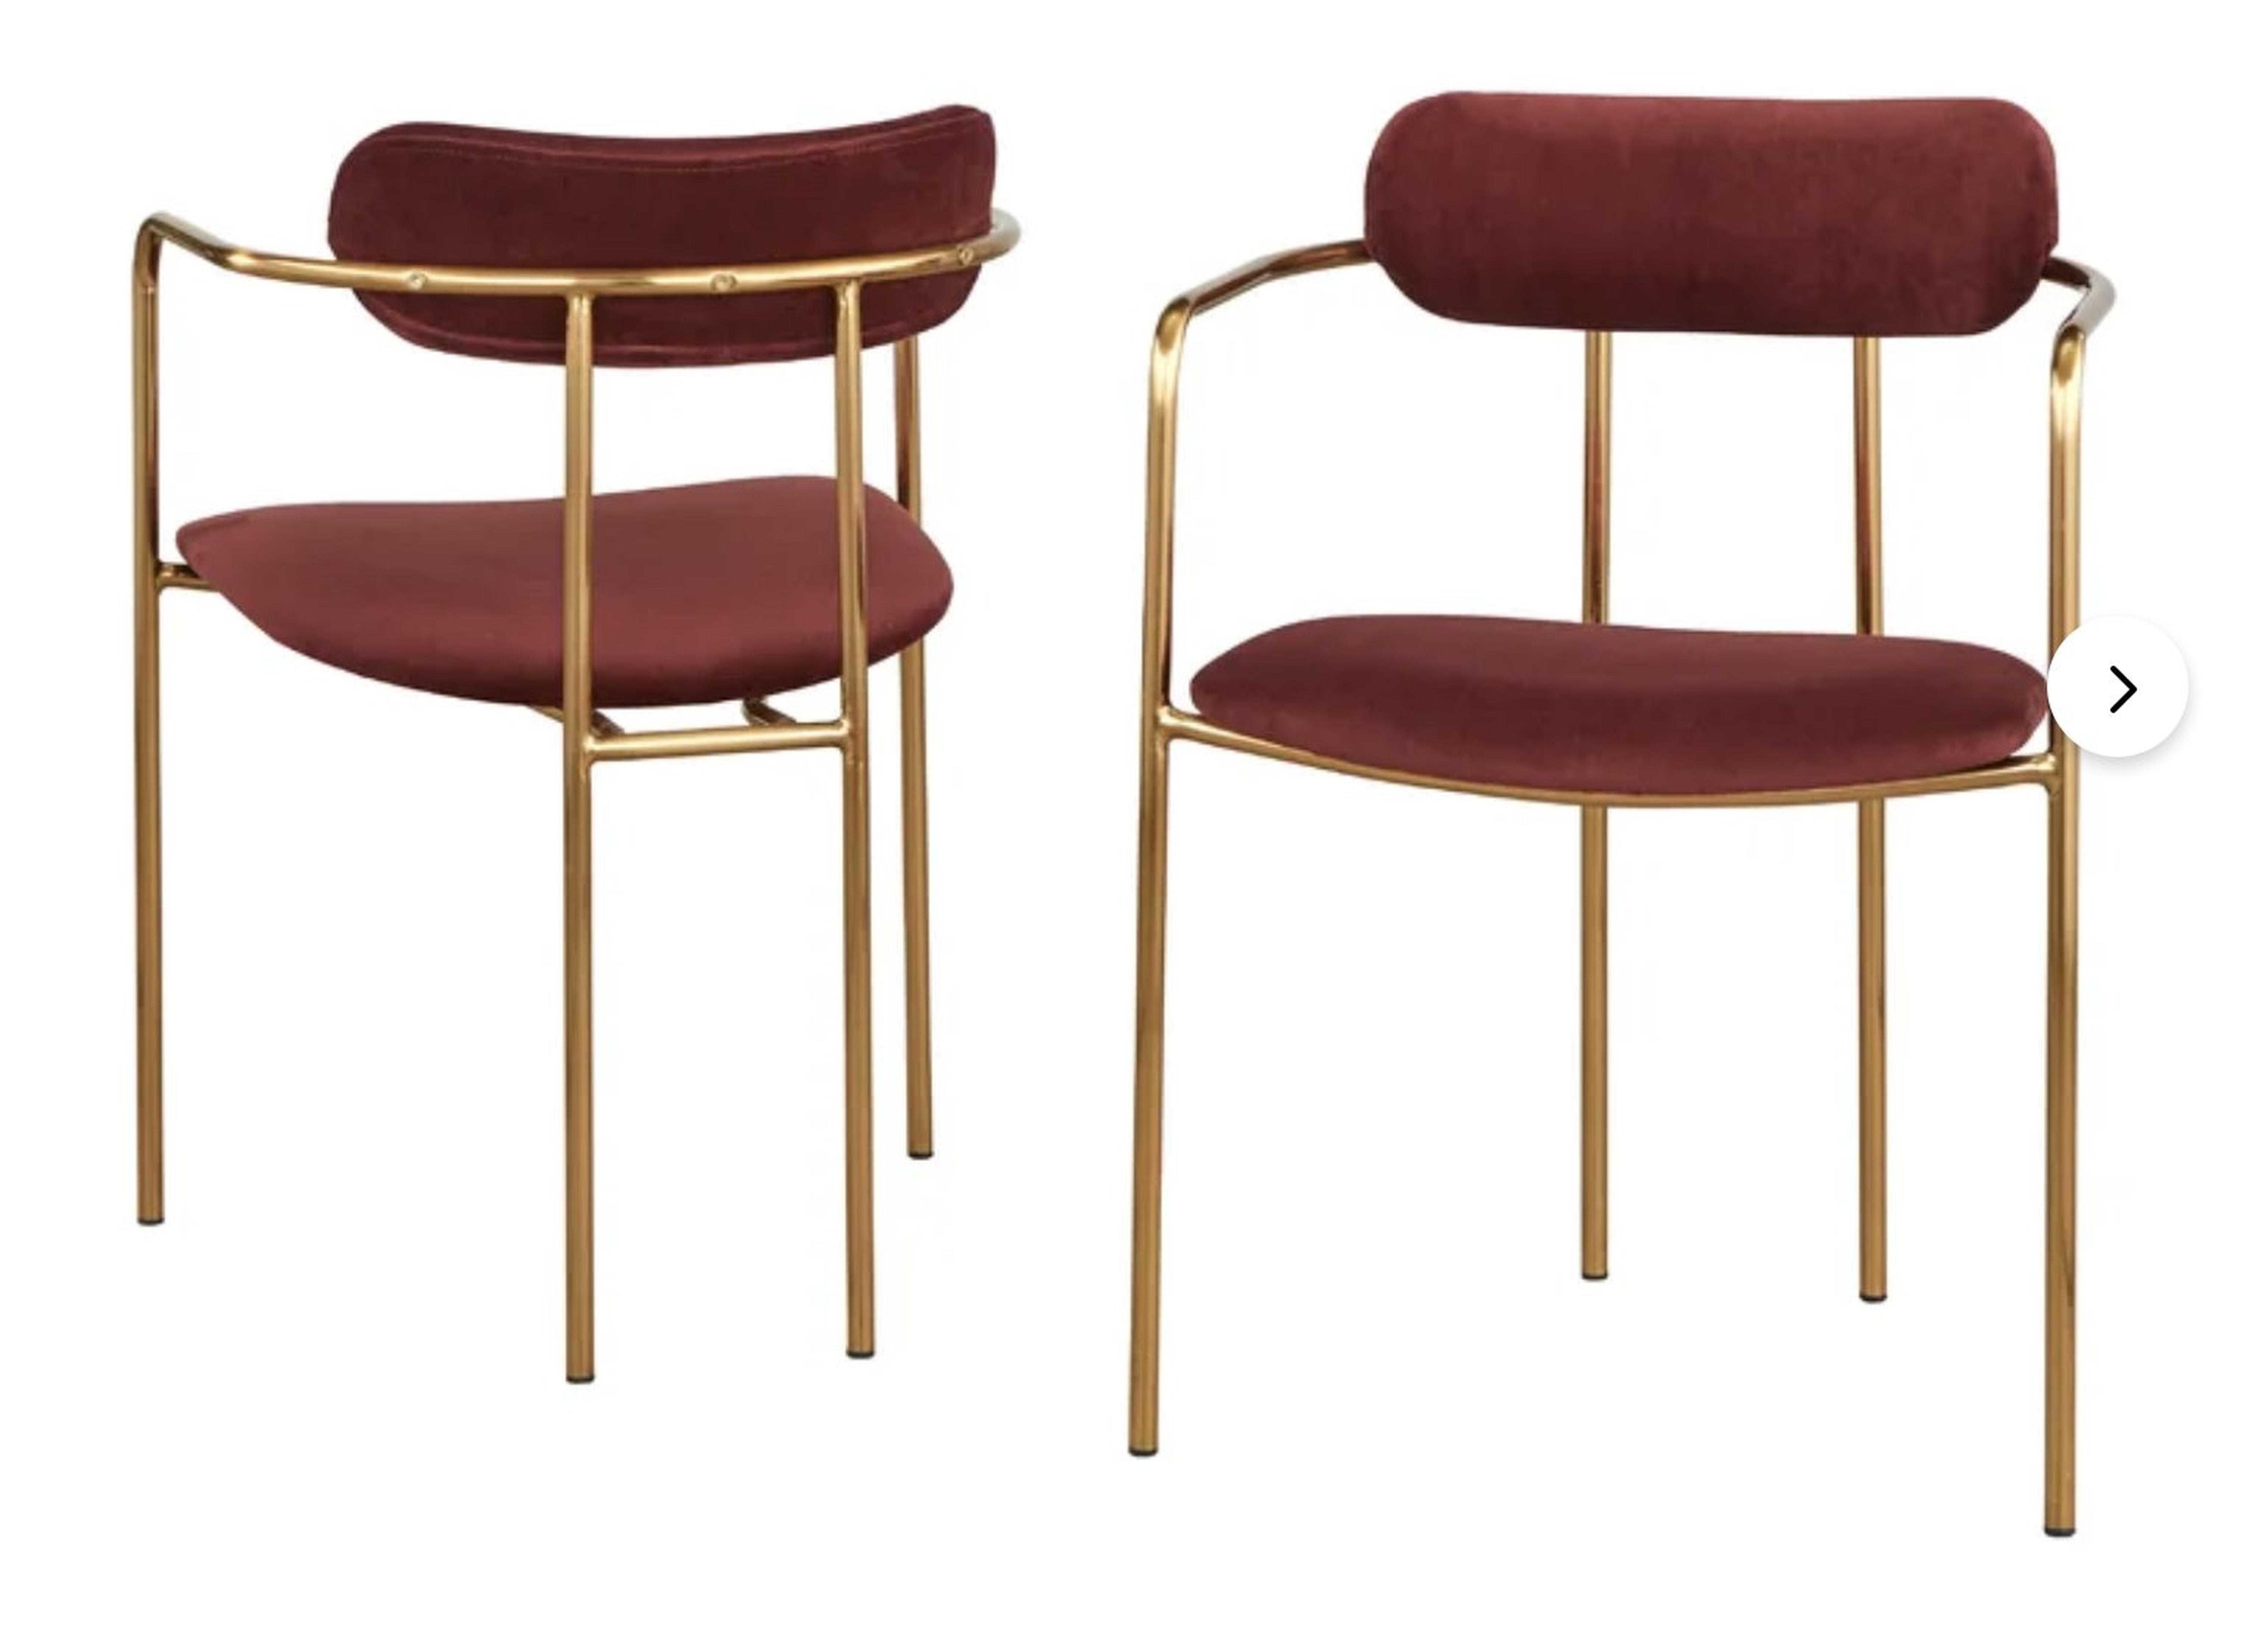 Carrigan Upholstered Dining Chair - set of 2 - Wayfair